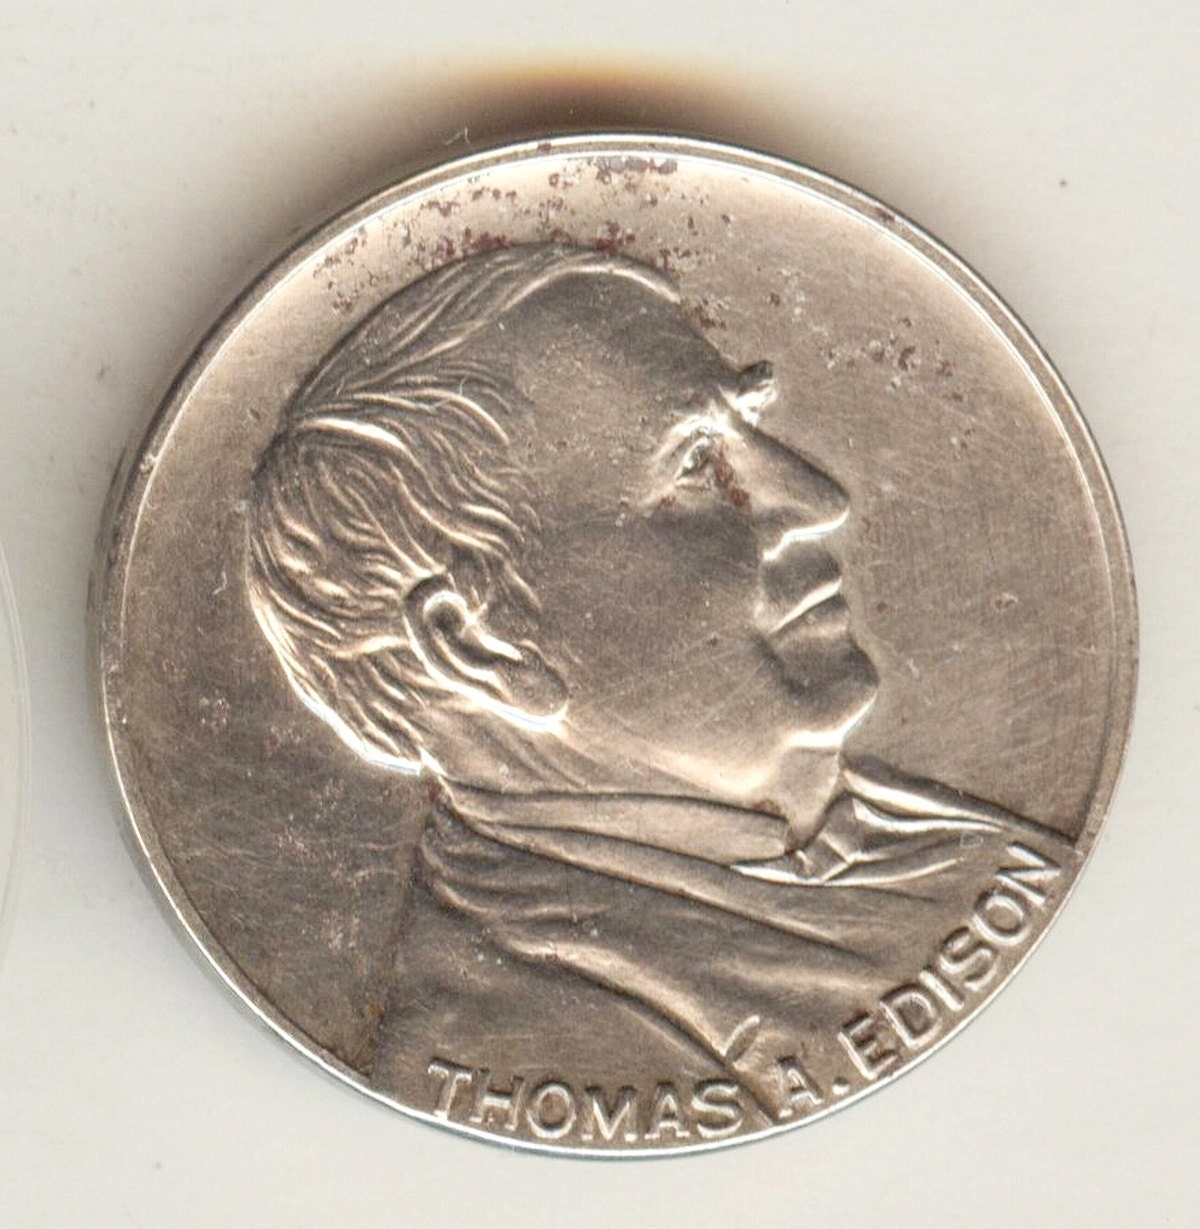 Thomas Edison Coin